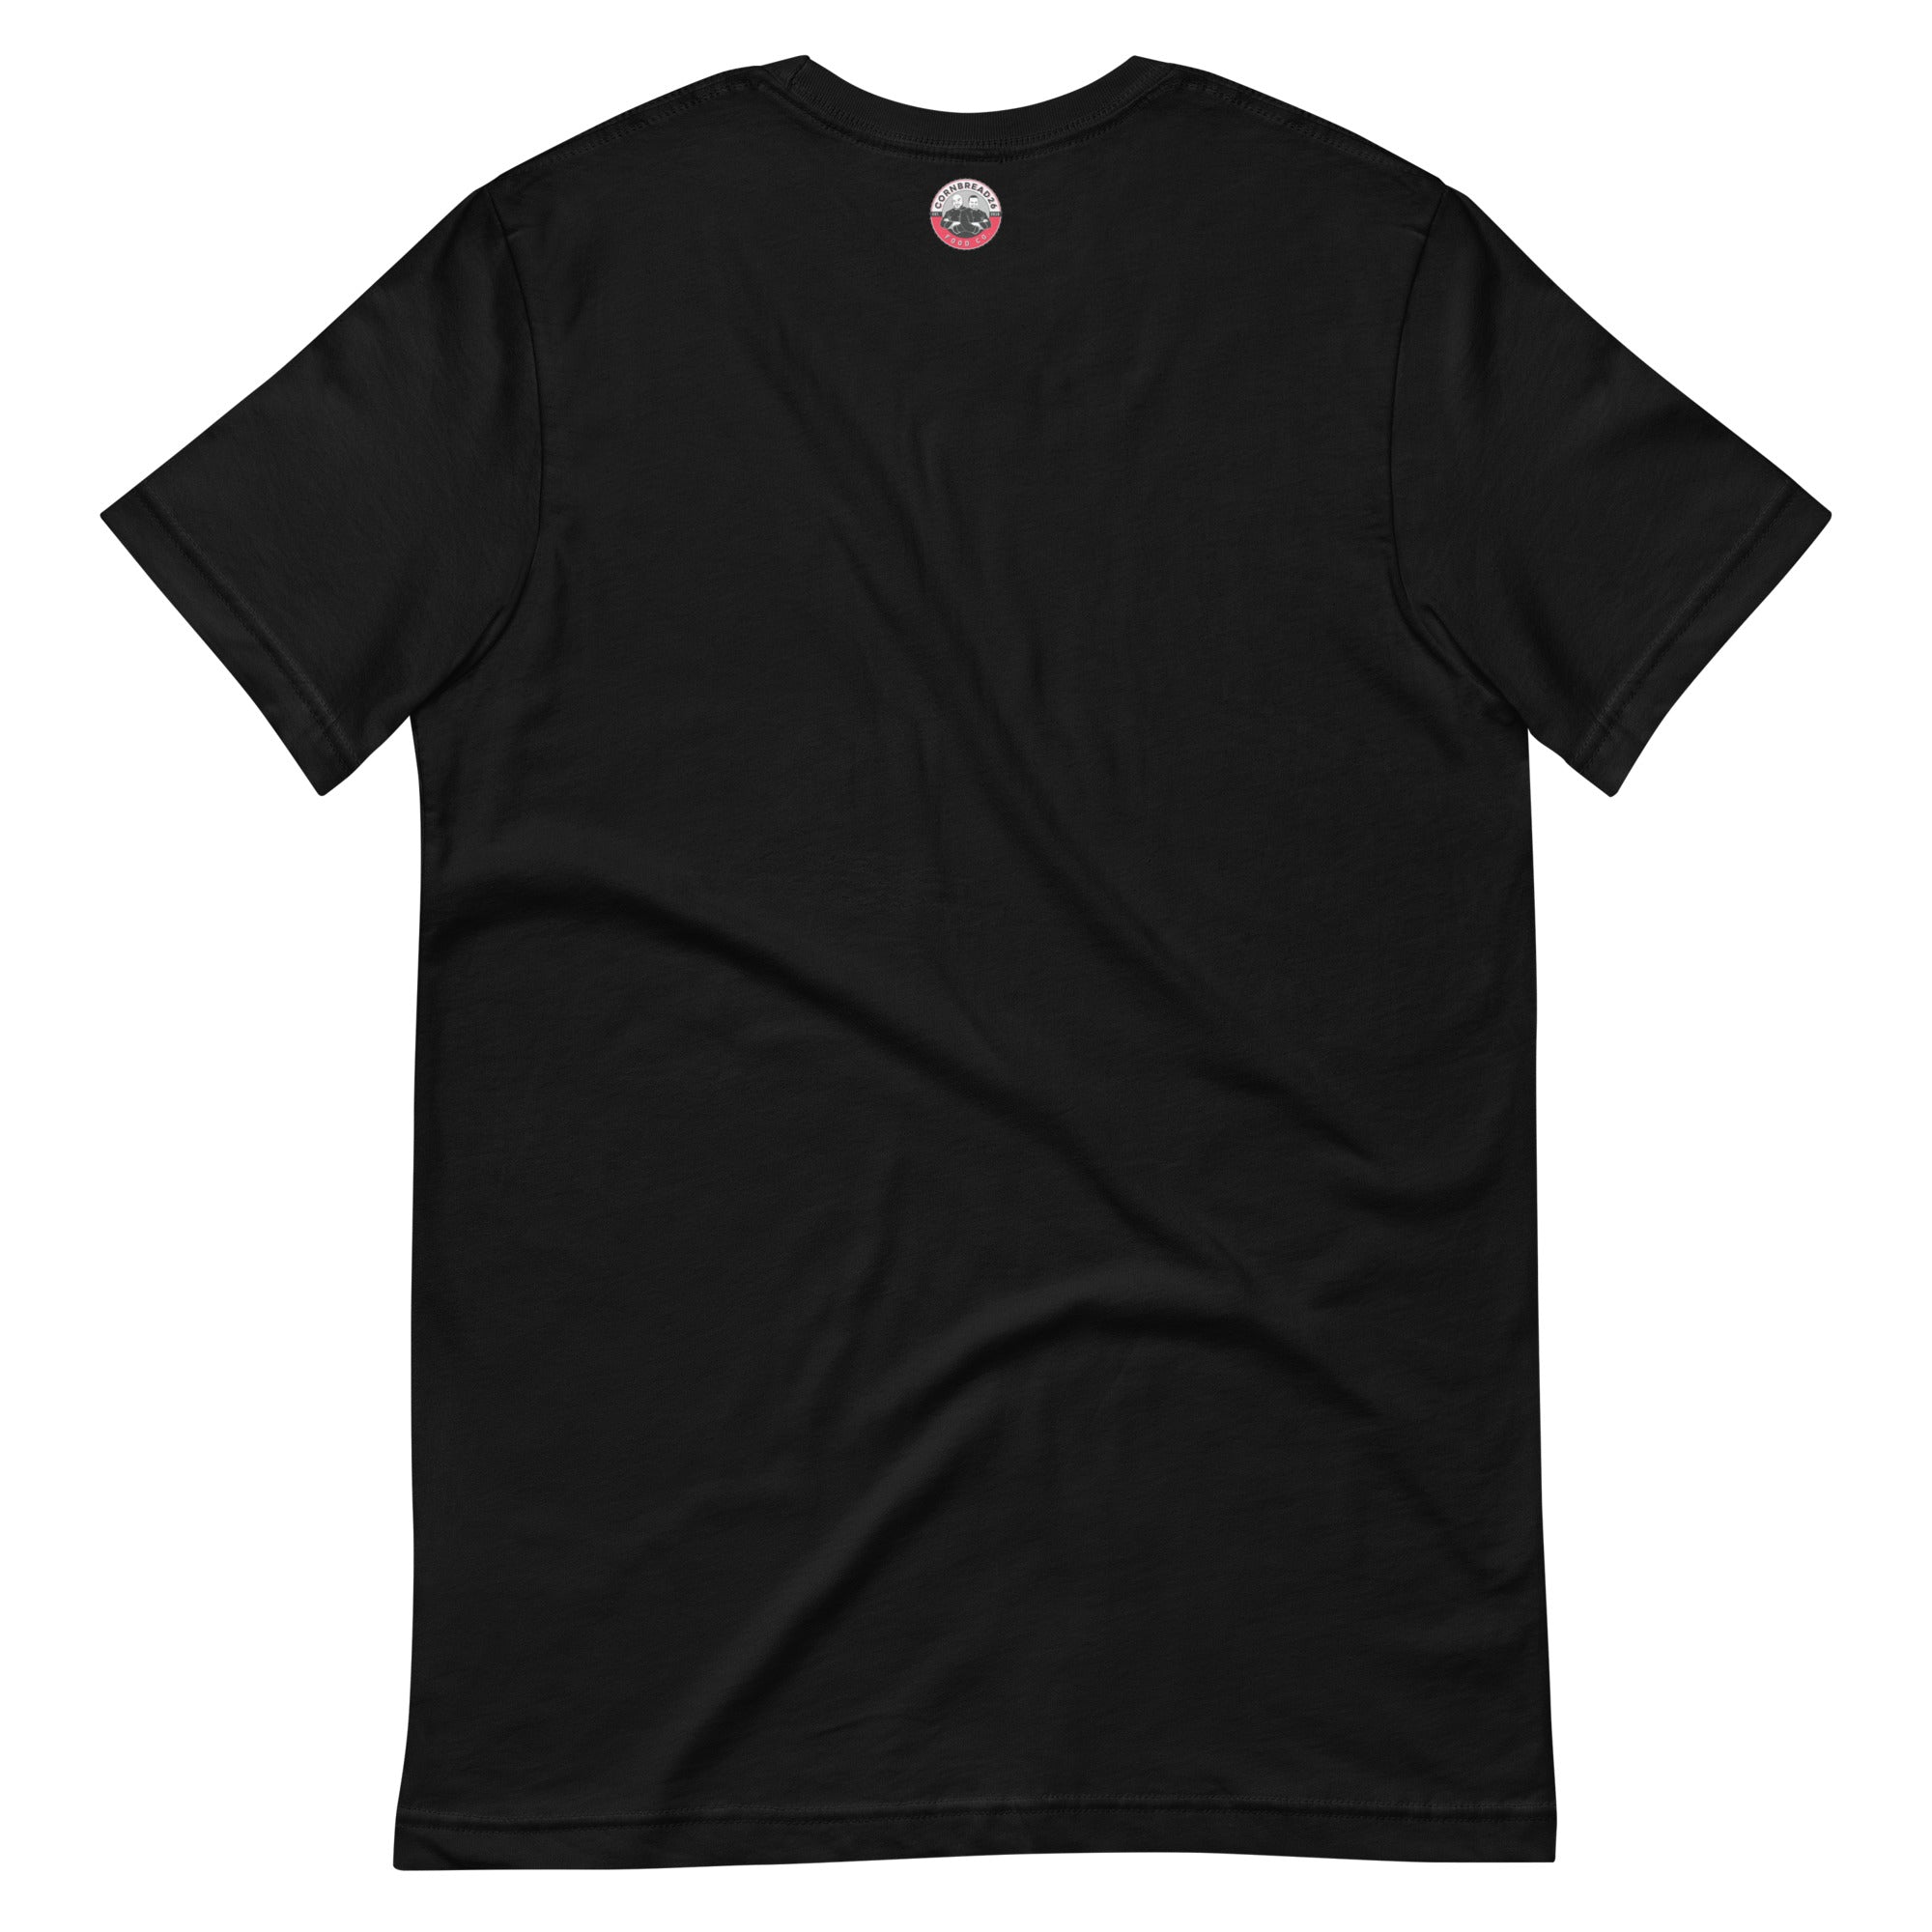 Unisex "Pro Manisfester" Lightweight Cotton T-Shirt - THE CORNBREAD KITCHEN SHOP